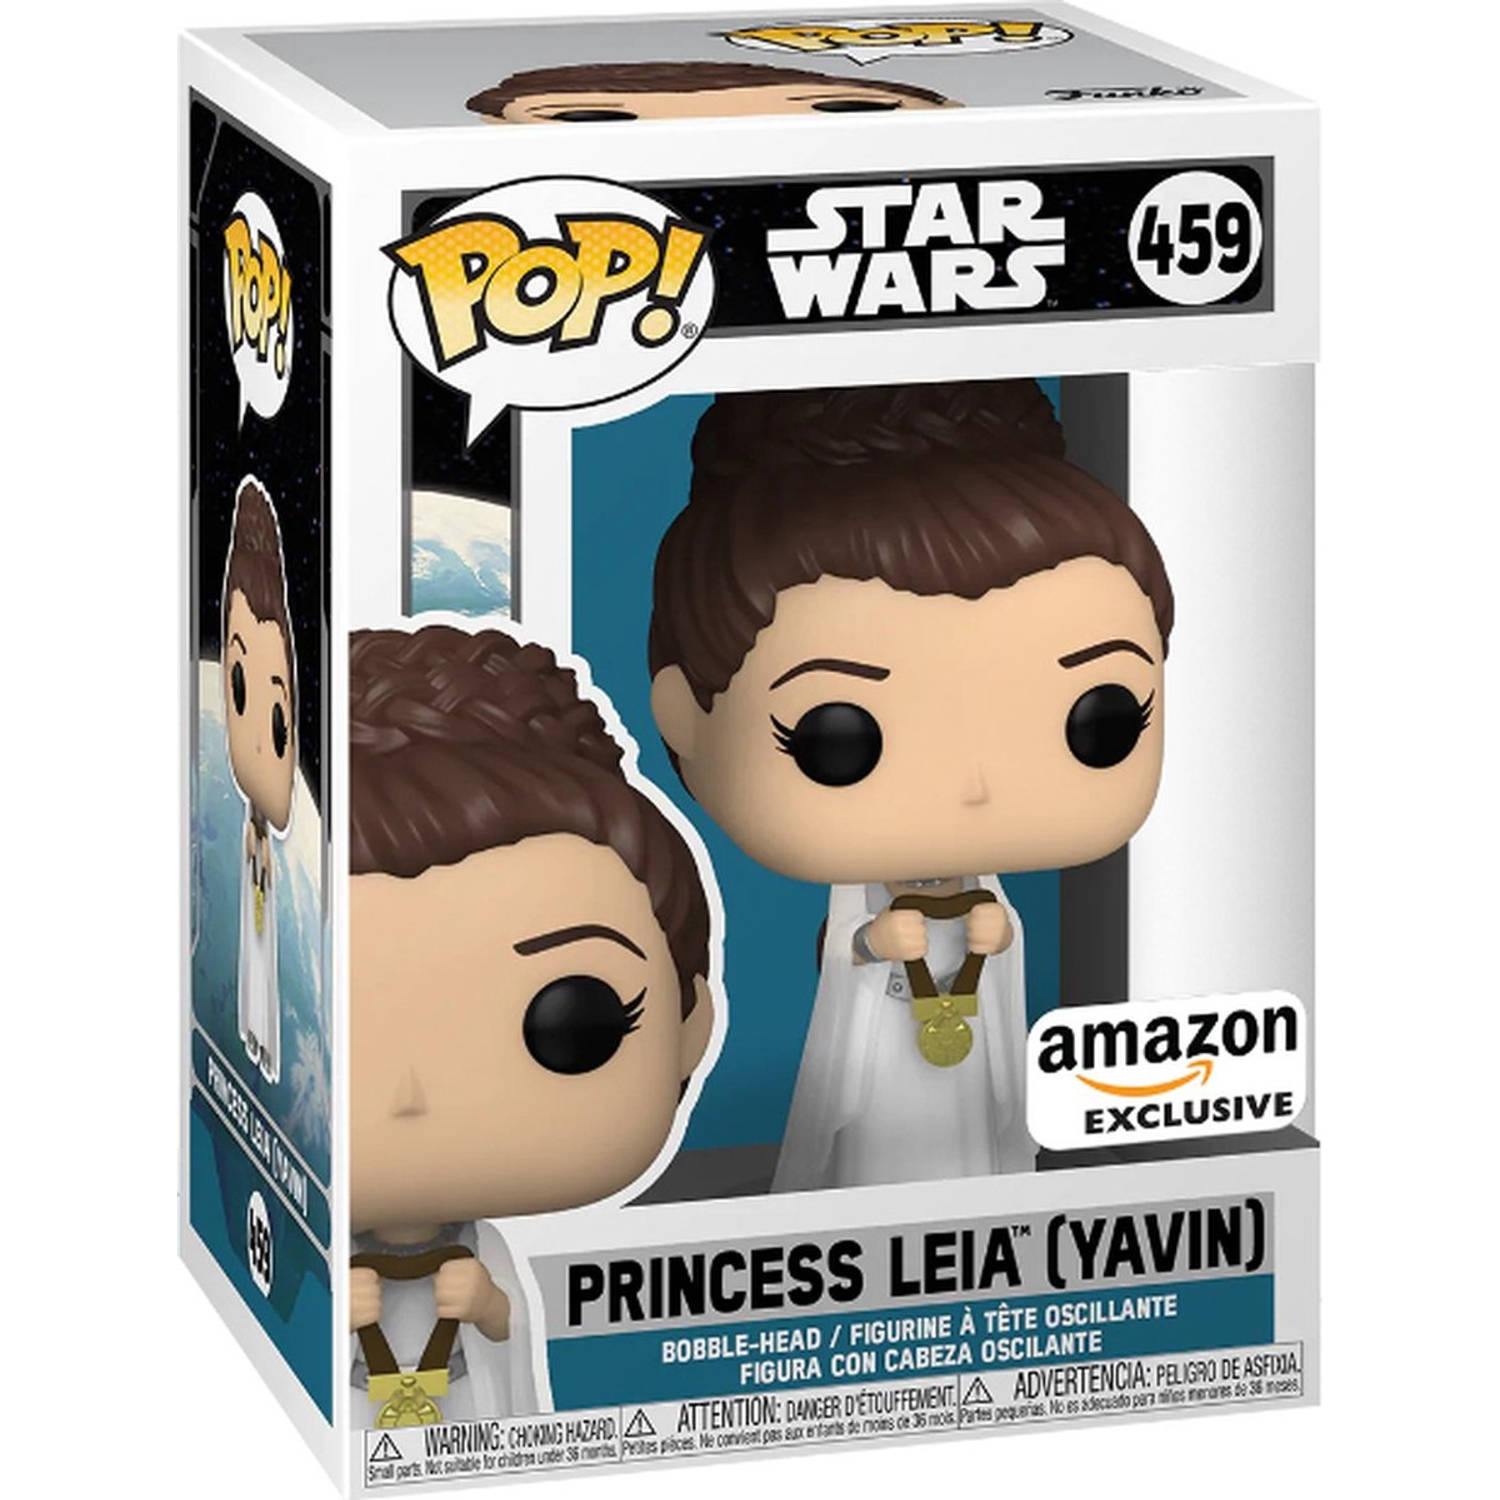 POP! Star Wars princess Leia Yavin 459 Exclusive